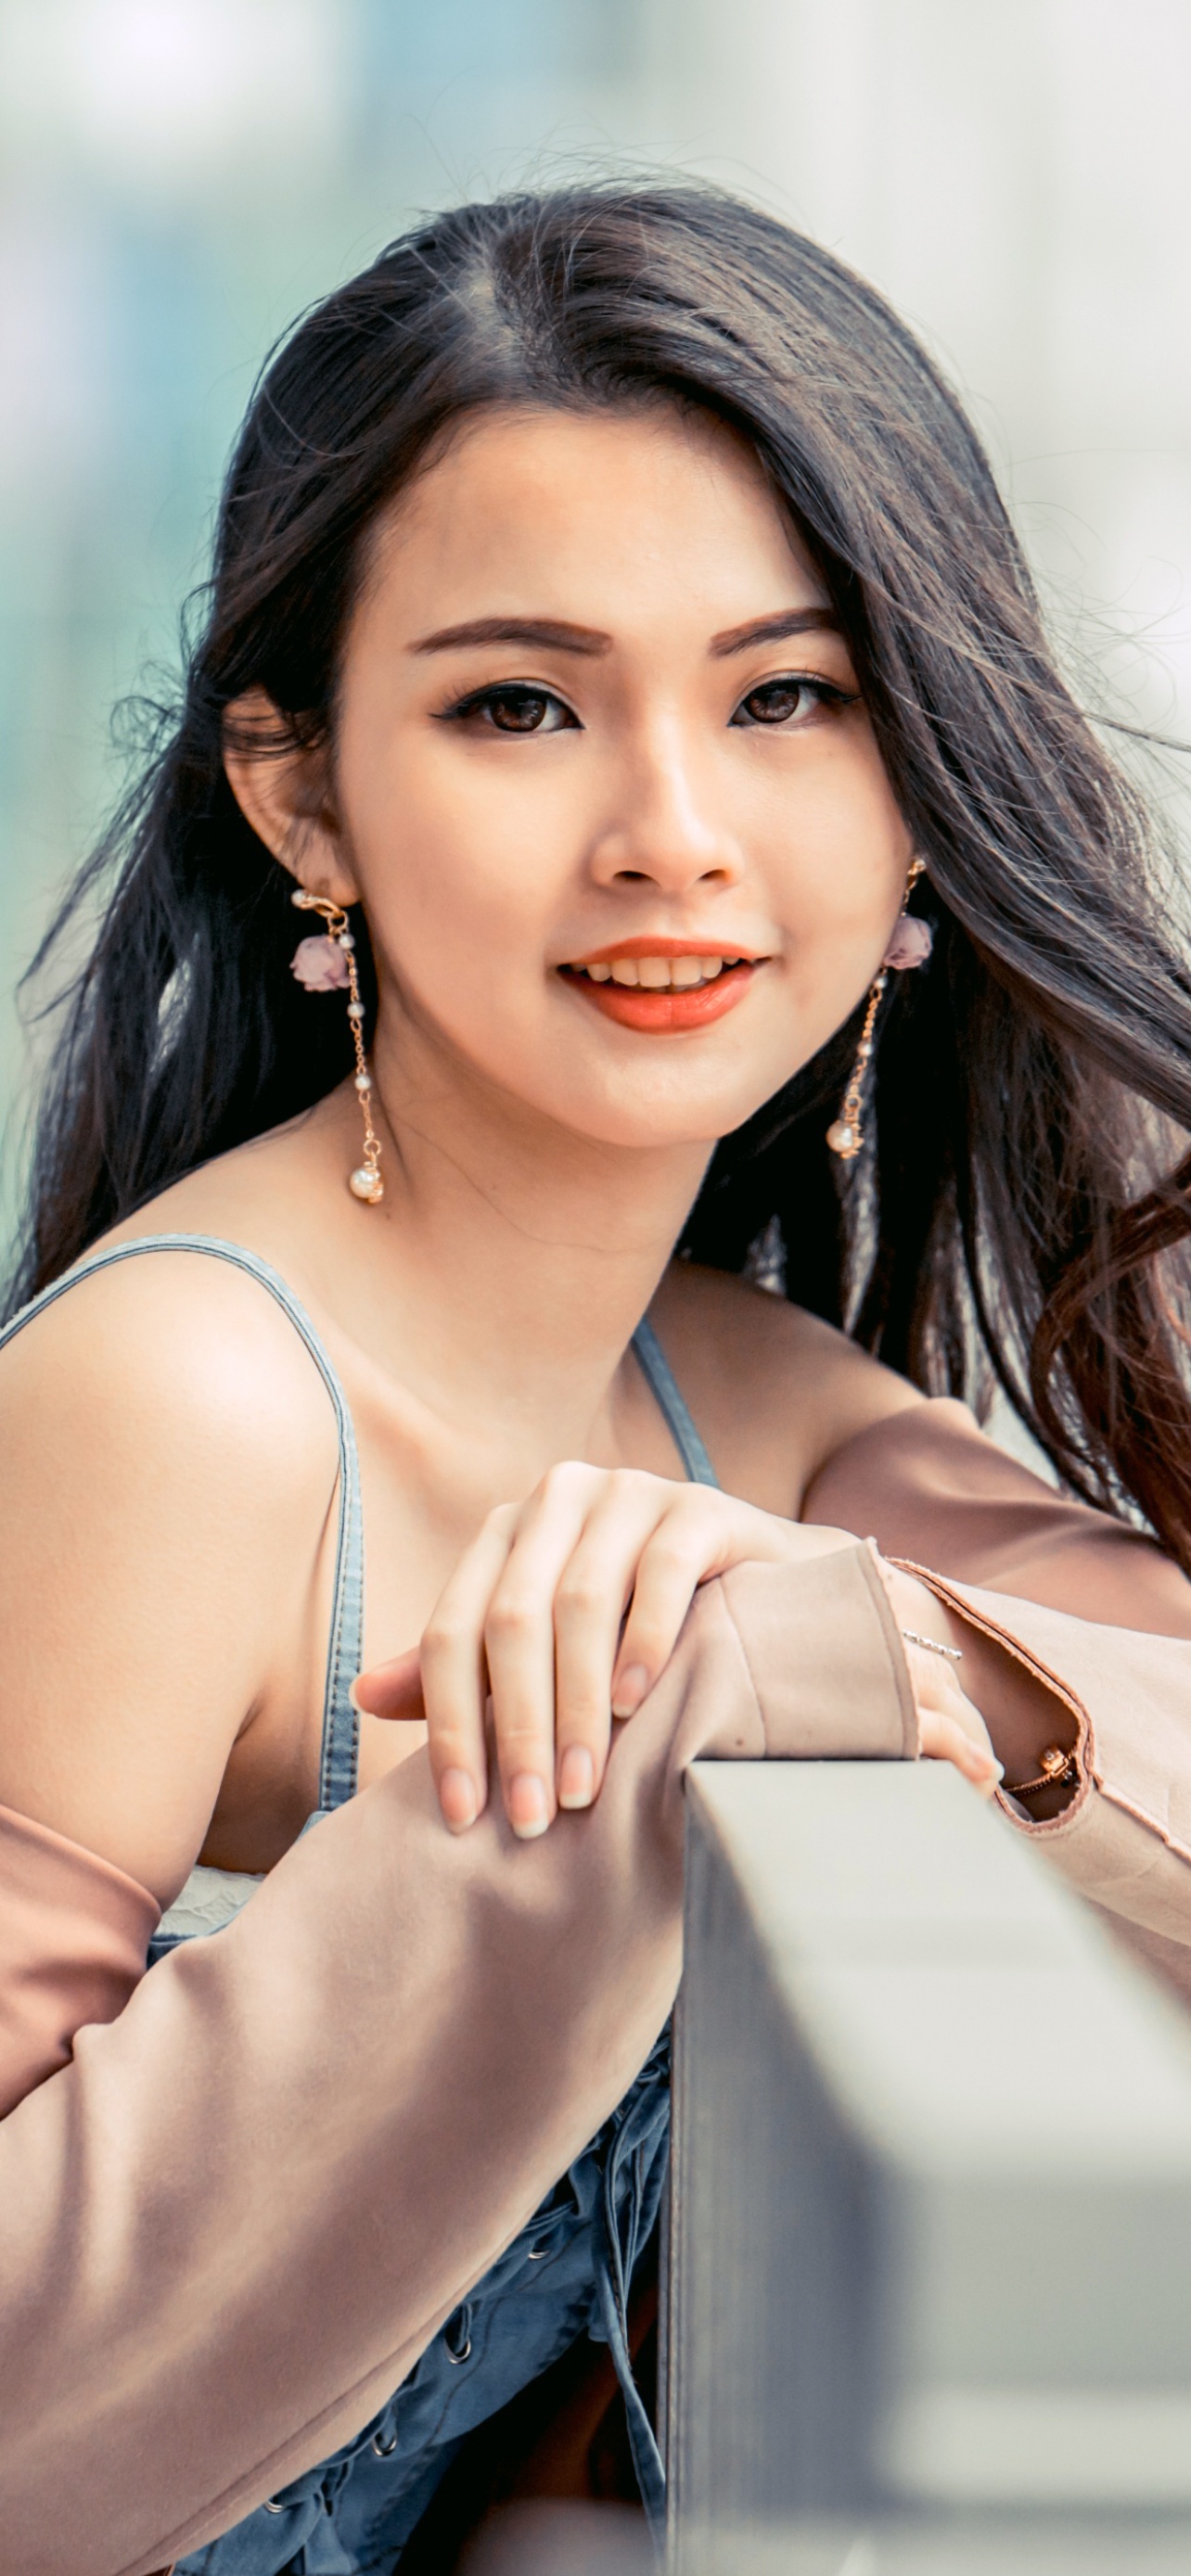 Chinese Beautiful Flower Girl 4K wallpaper download